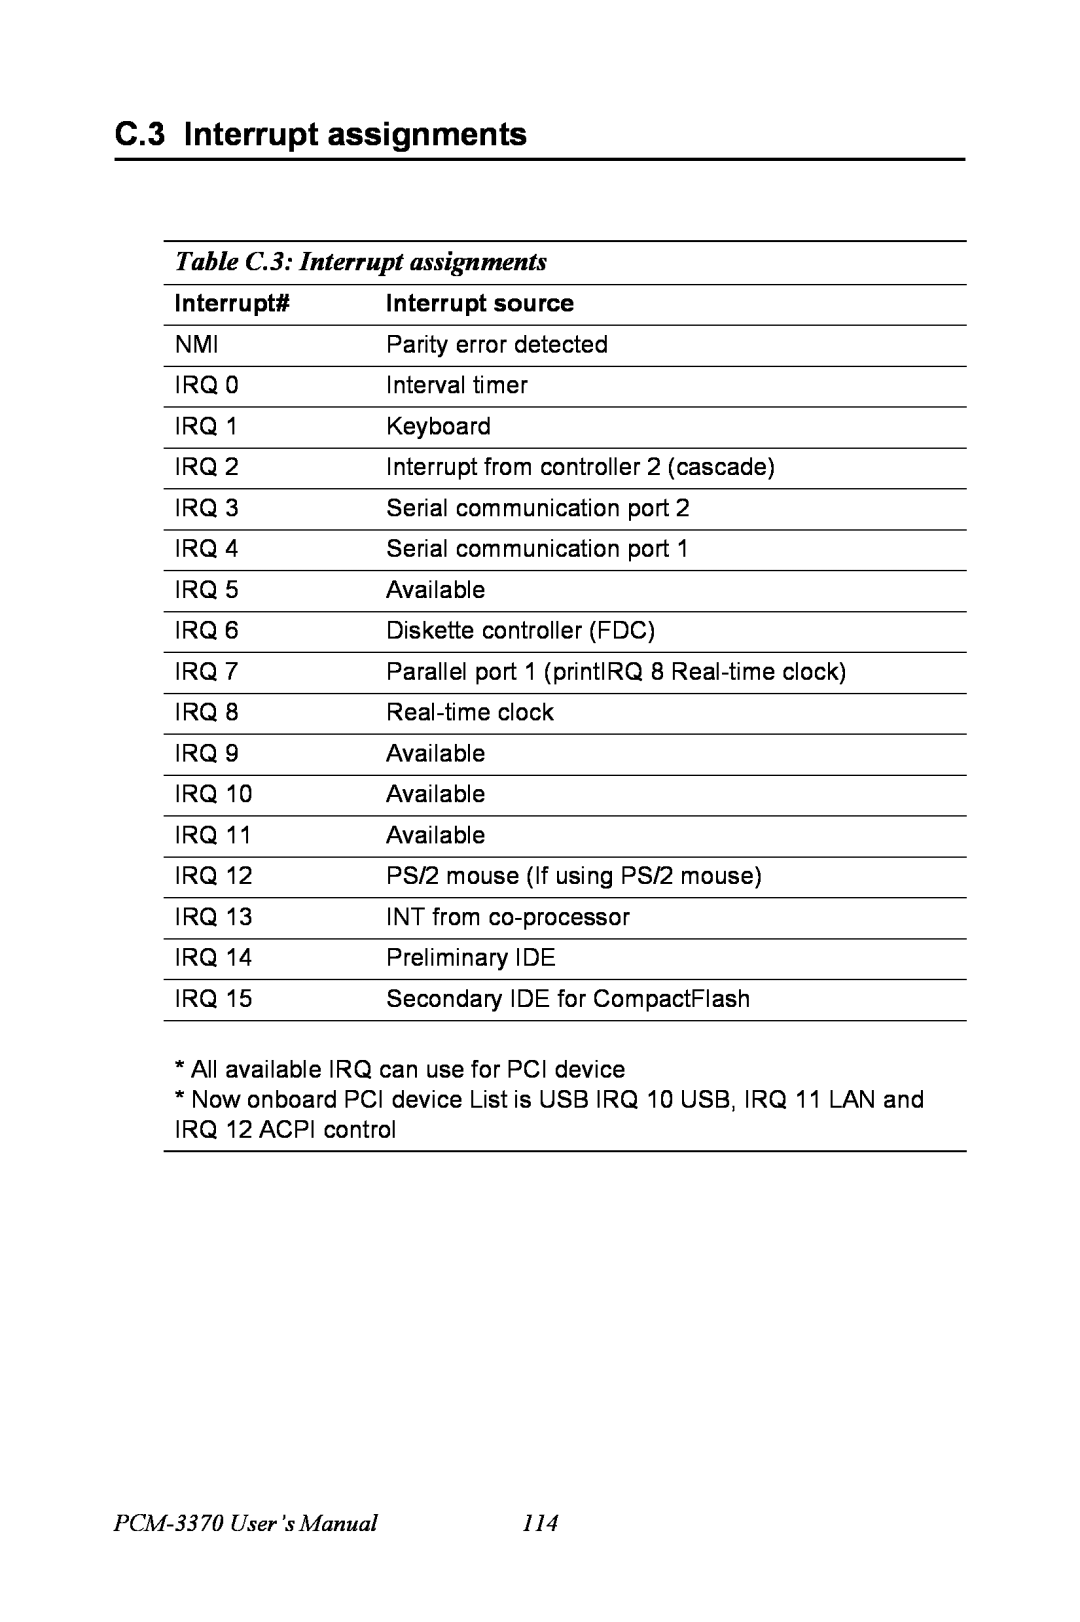 Intel user manual Table C.3 Interrupt assignments, Interrupt#, Interrupt source, PCM-3370 User’s Manual 